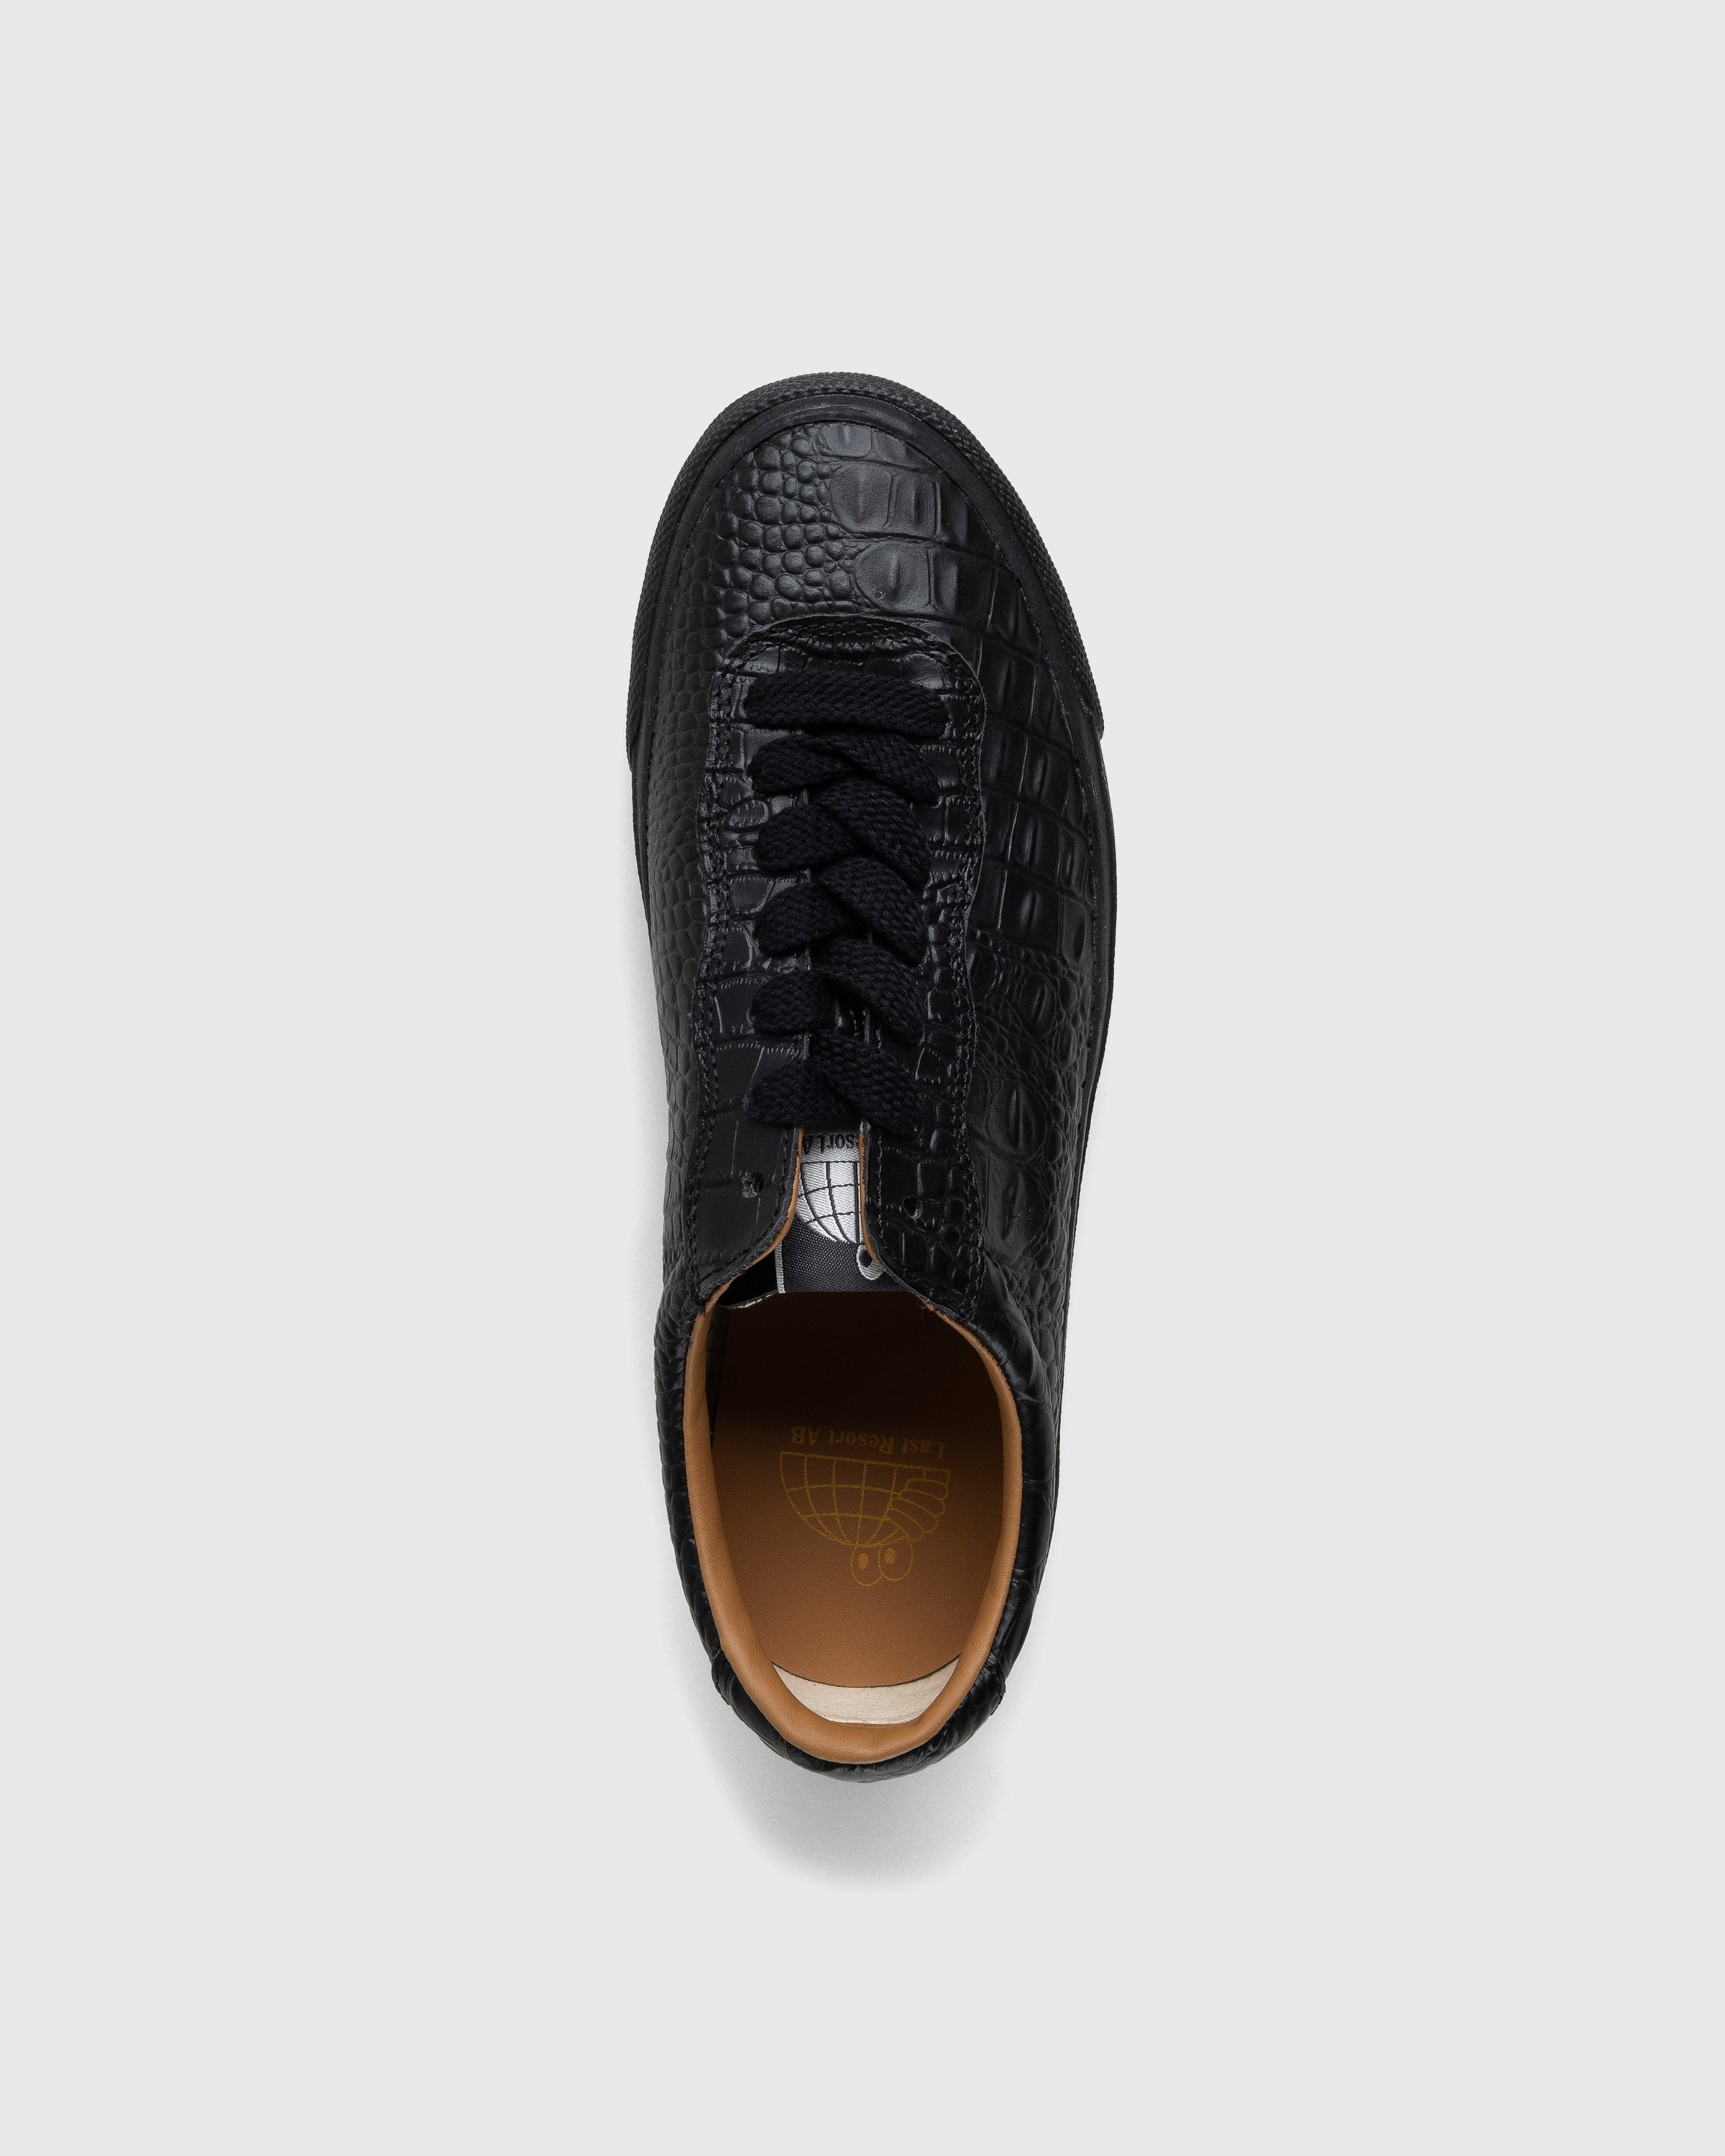 Last Resort AB - VM001-Croc LO Black/Black - Footwear - Black - Image 5